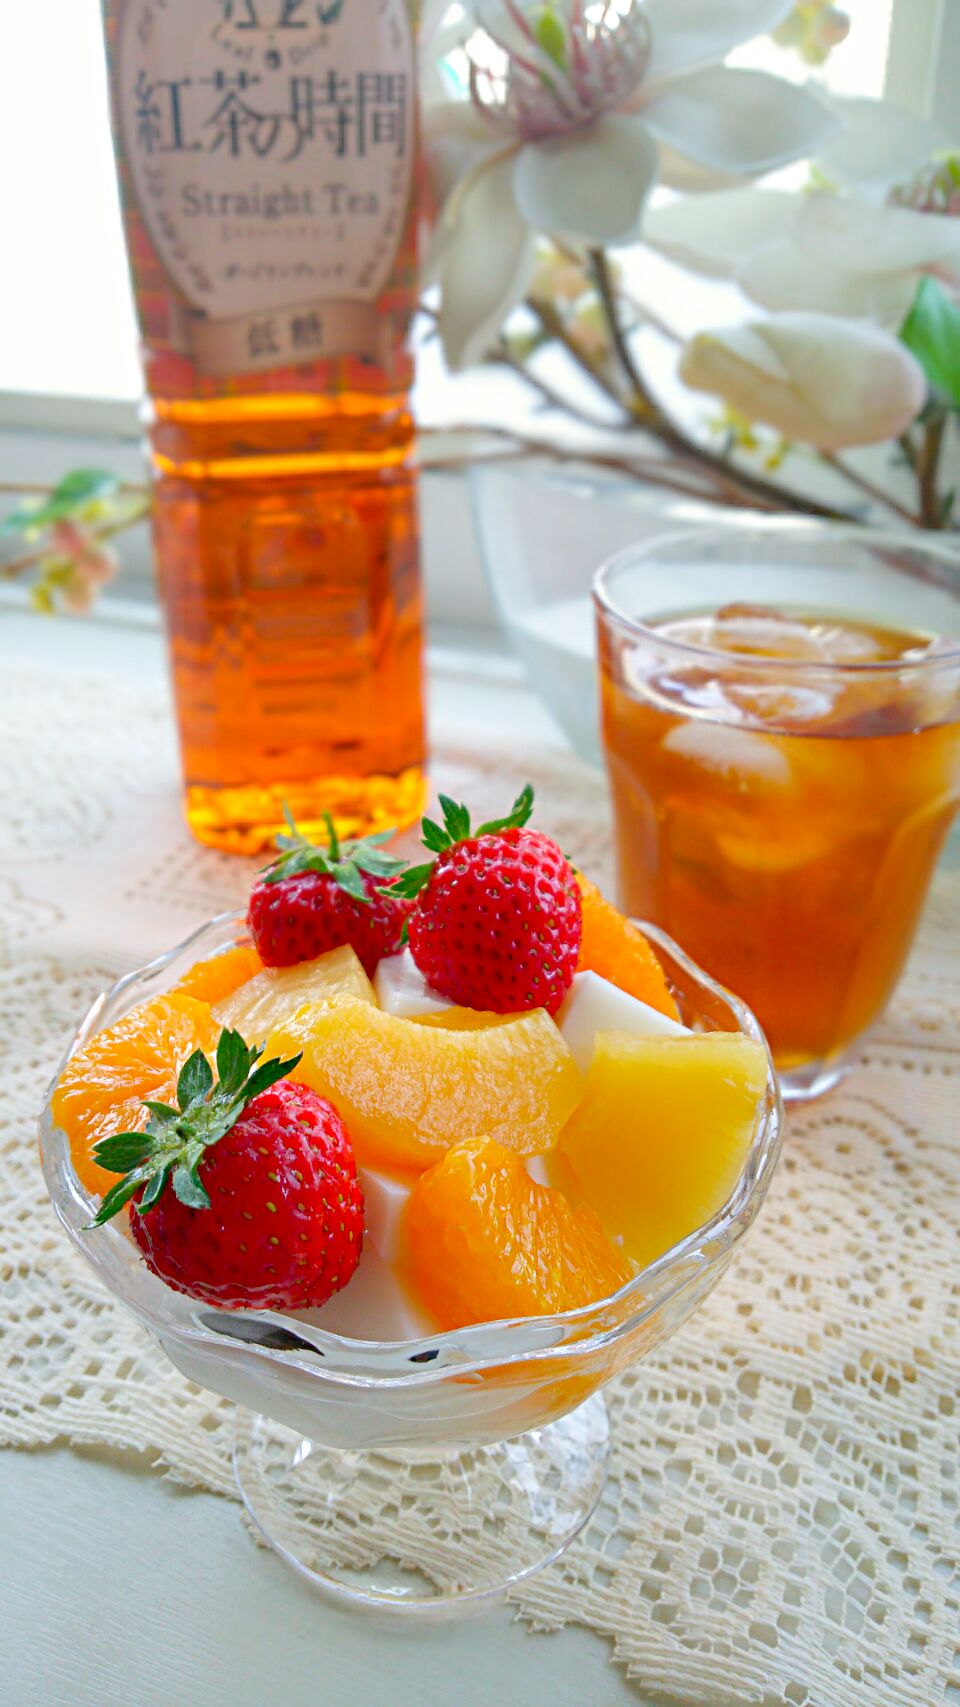 Tea time☕ Milk agar with fruits 紅茶の時間で牛乳かん #おうちカフェ #ティータイム